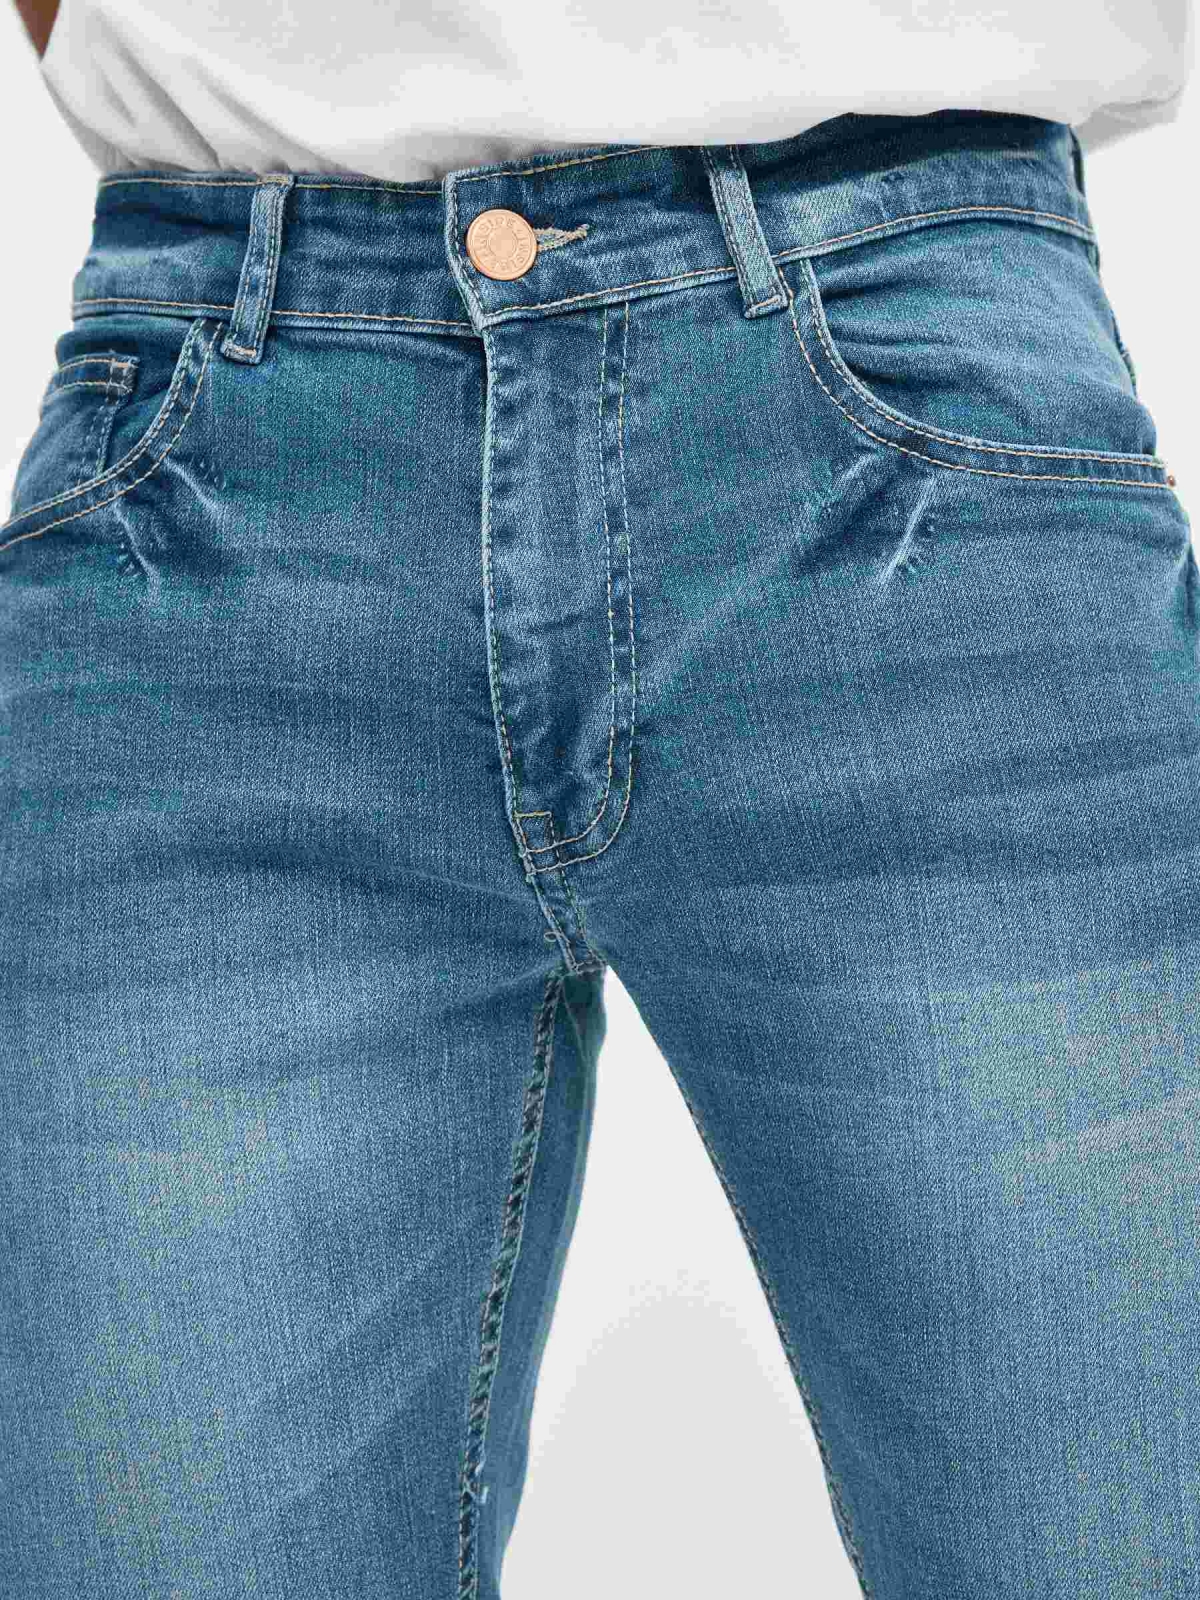 Basic blue jeans blue detail view